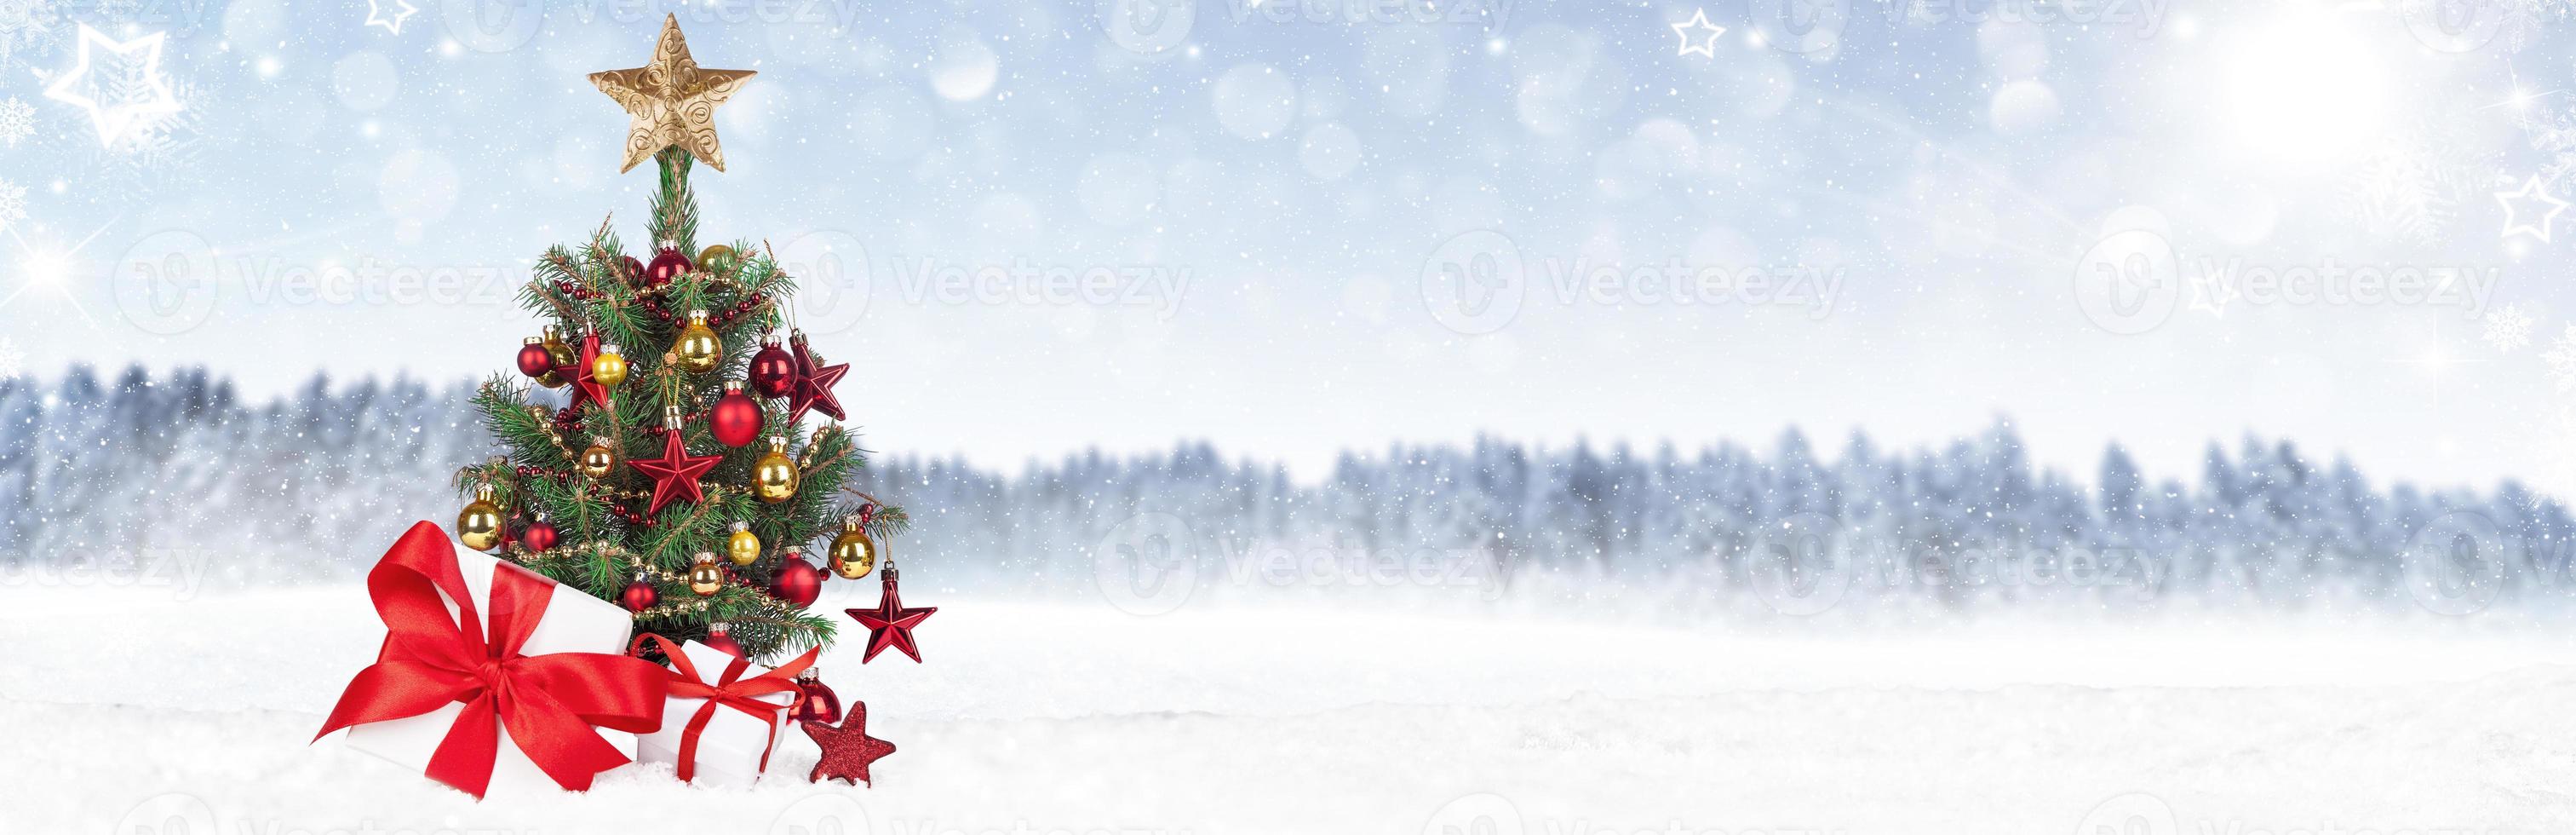 julgran med dekoration på en vinter bakgrund. foto